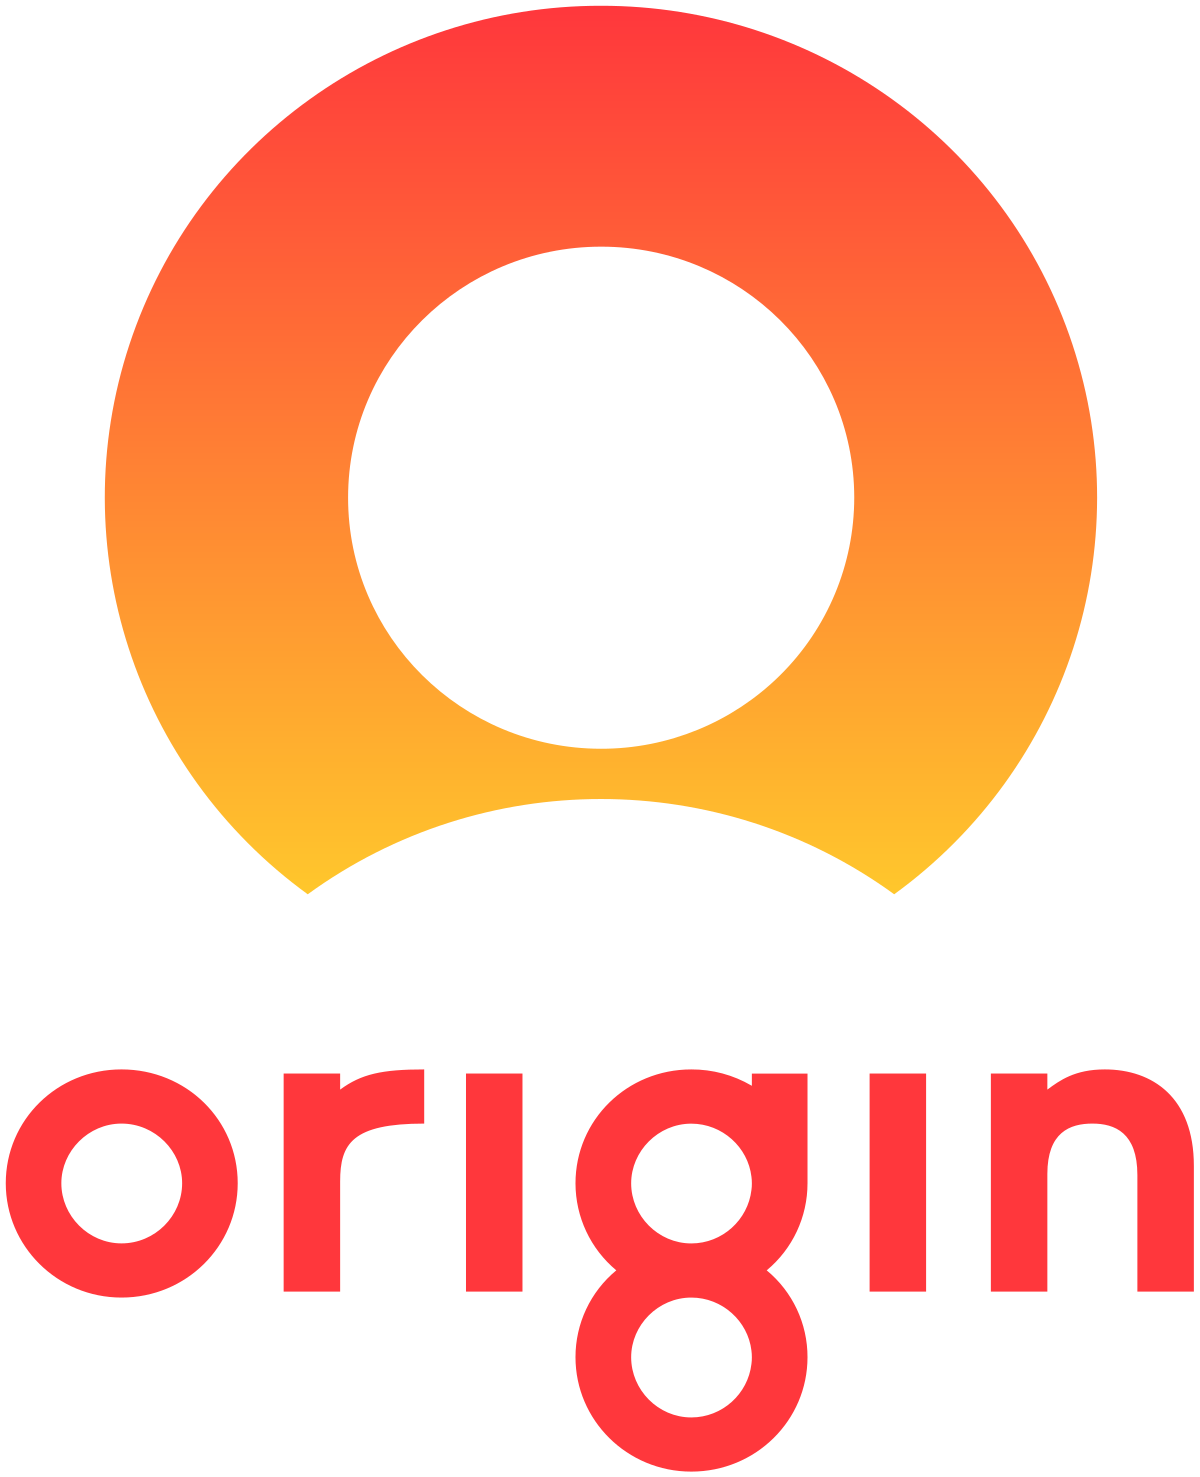 Origin Energy Limited